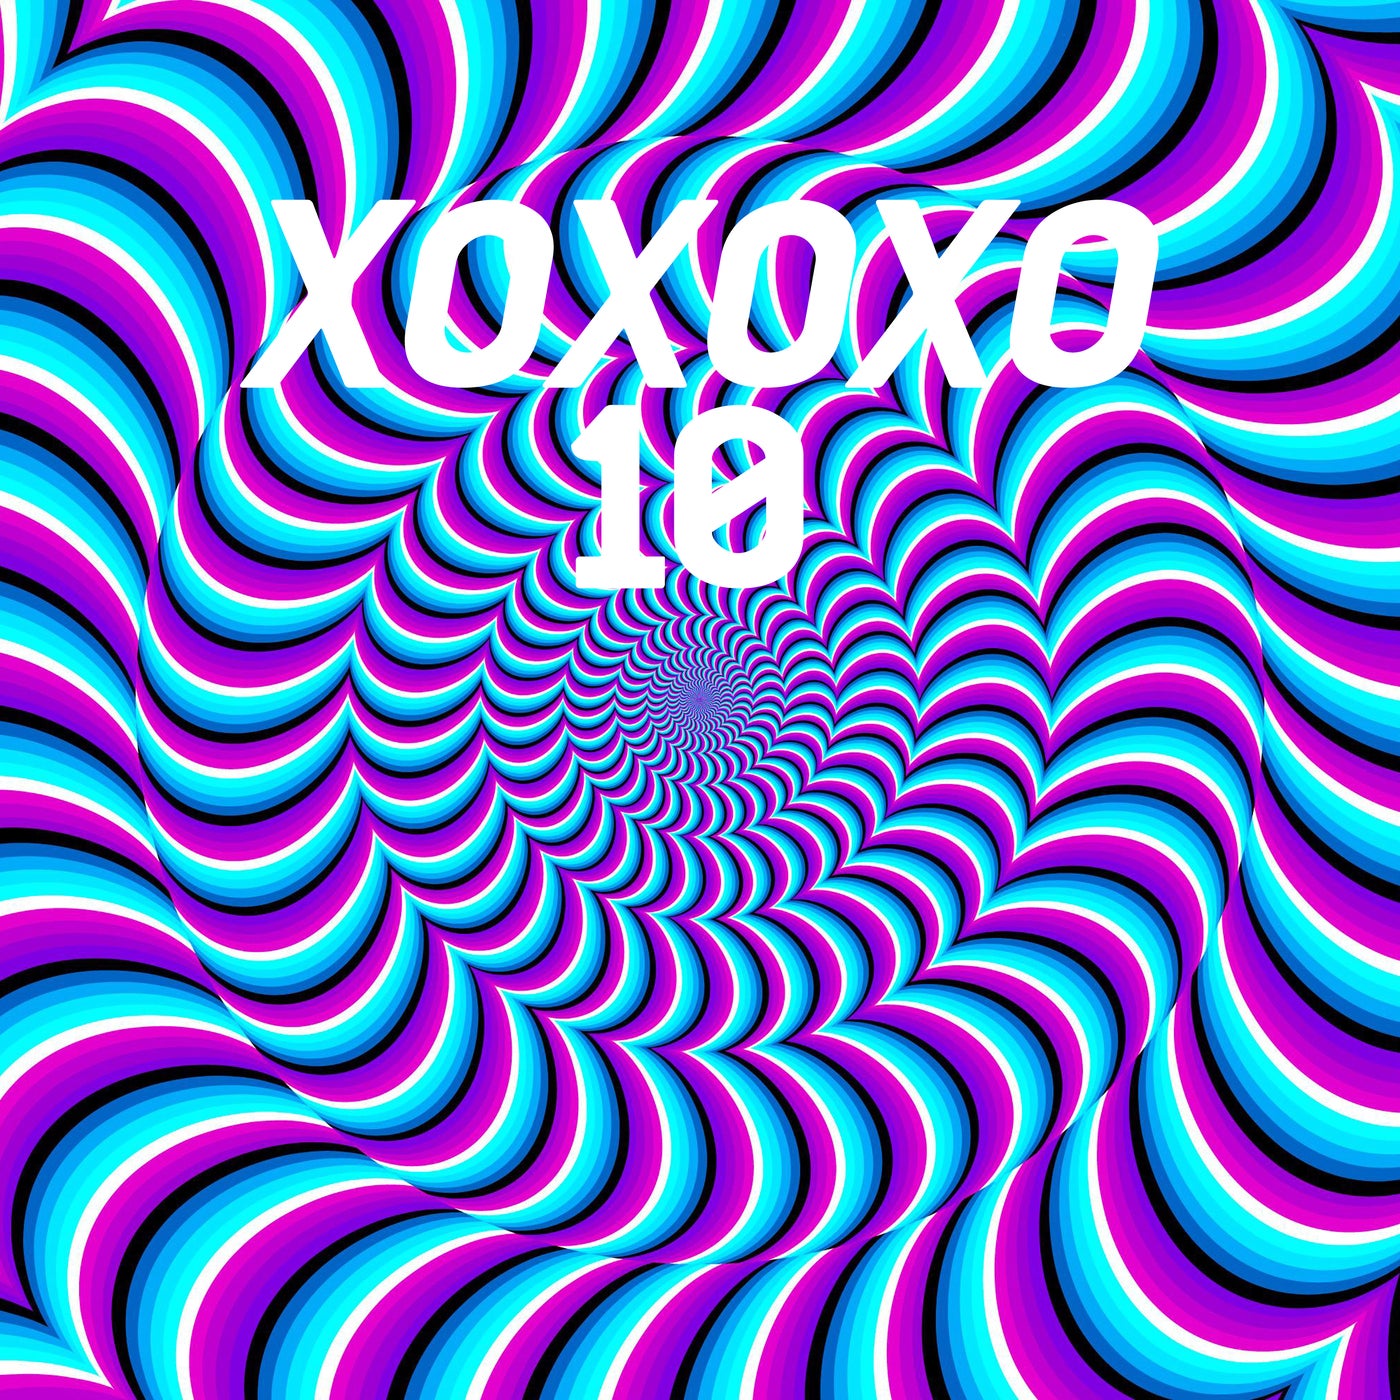 Download XOXOXO 10 on Electrobuzz